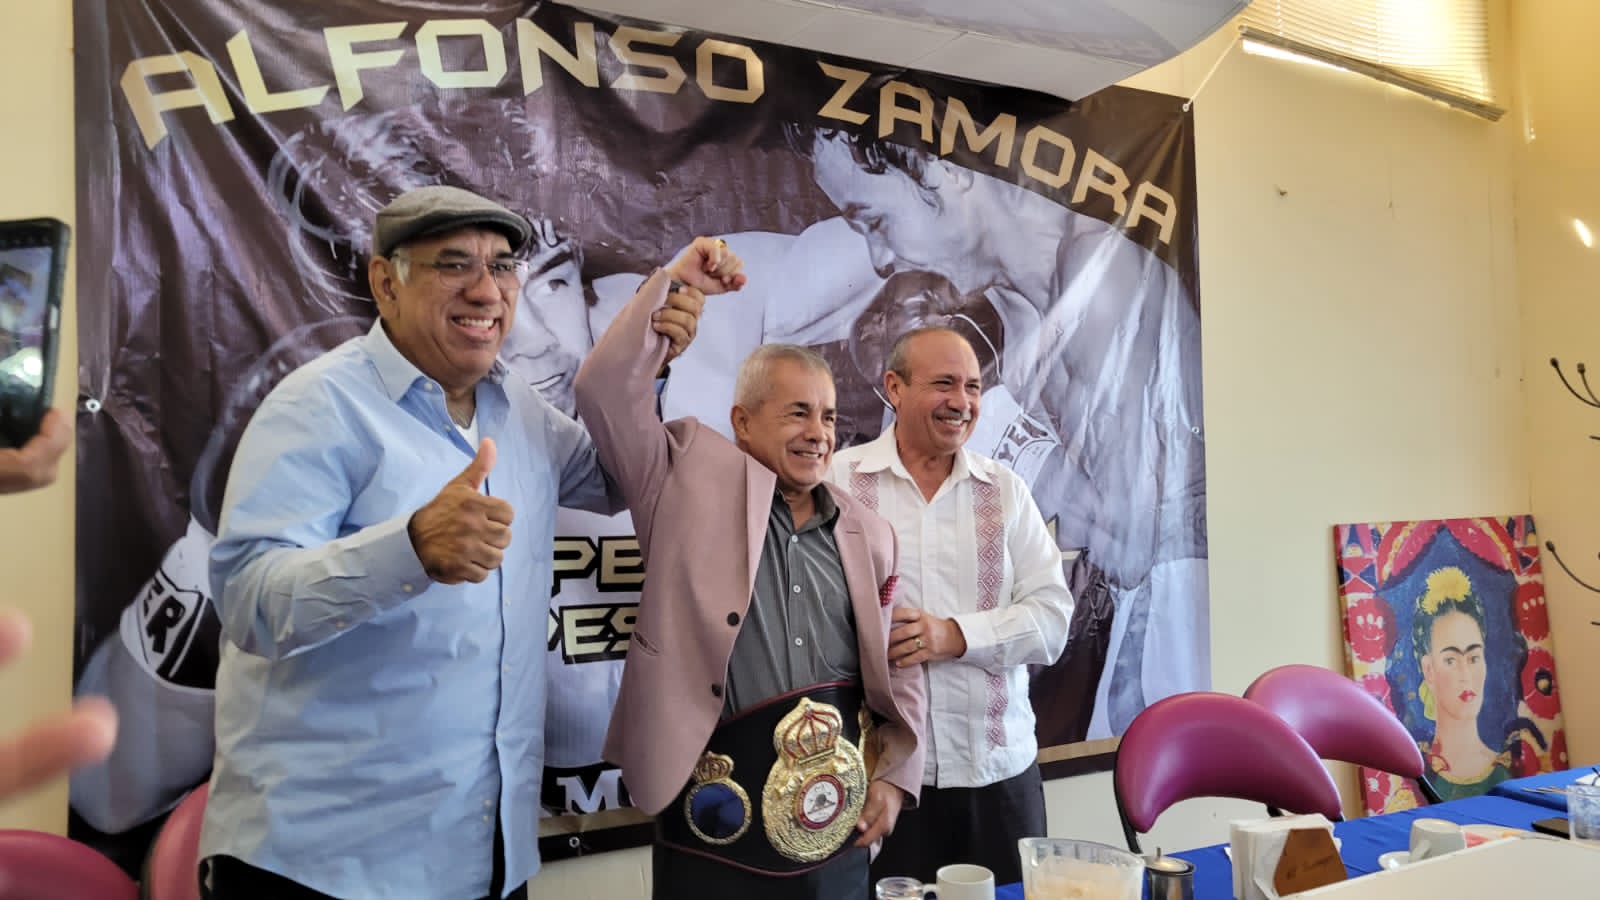 WBA honored Alfonso Zamora in Mexico 